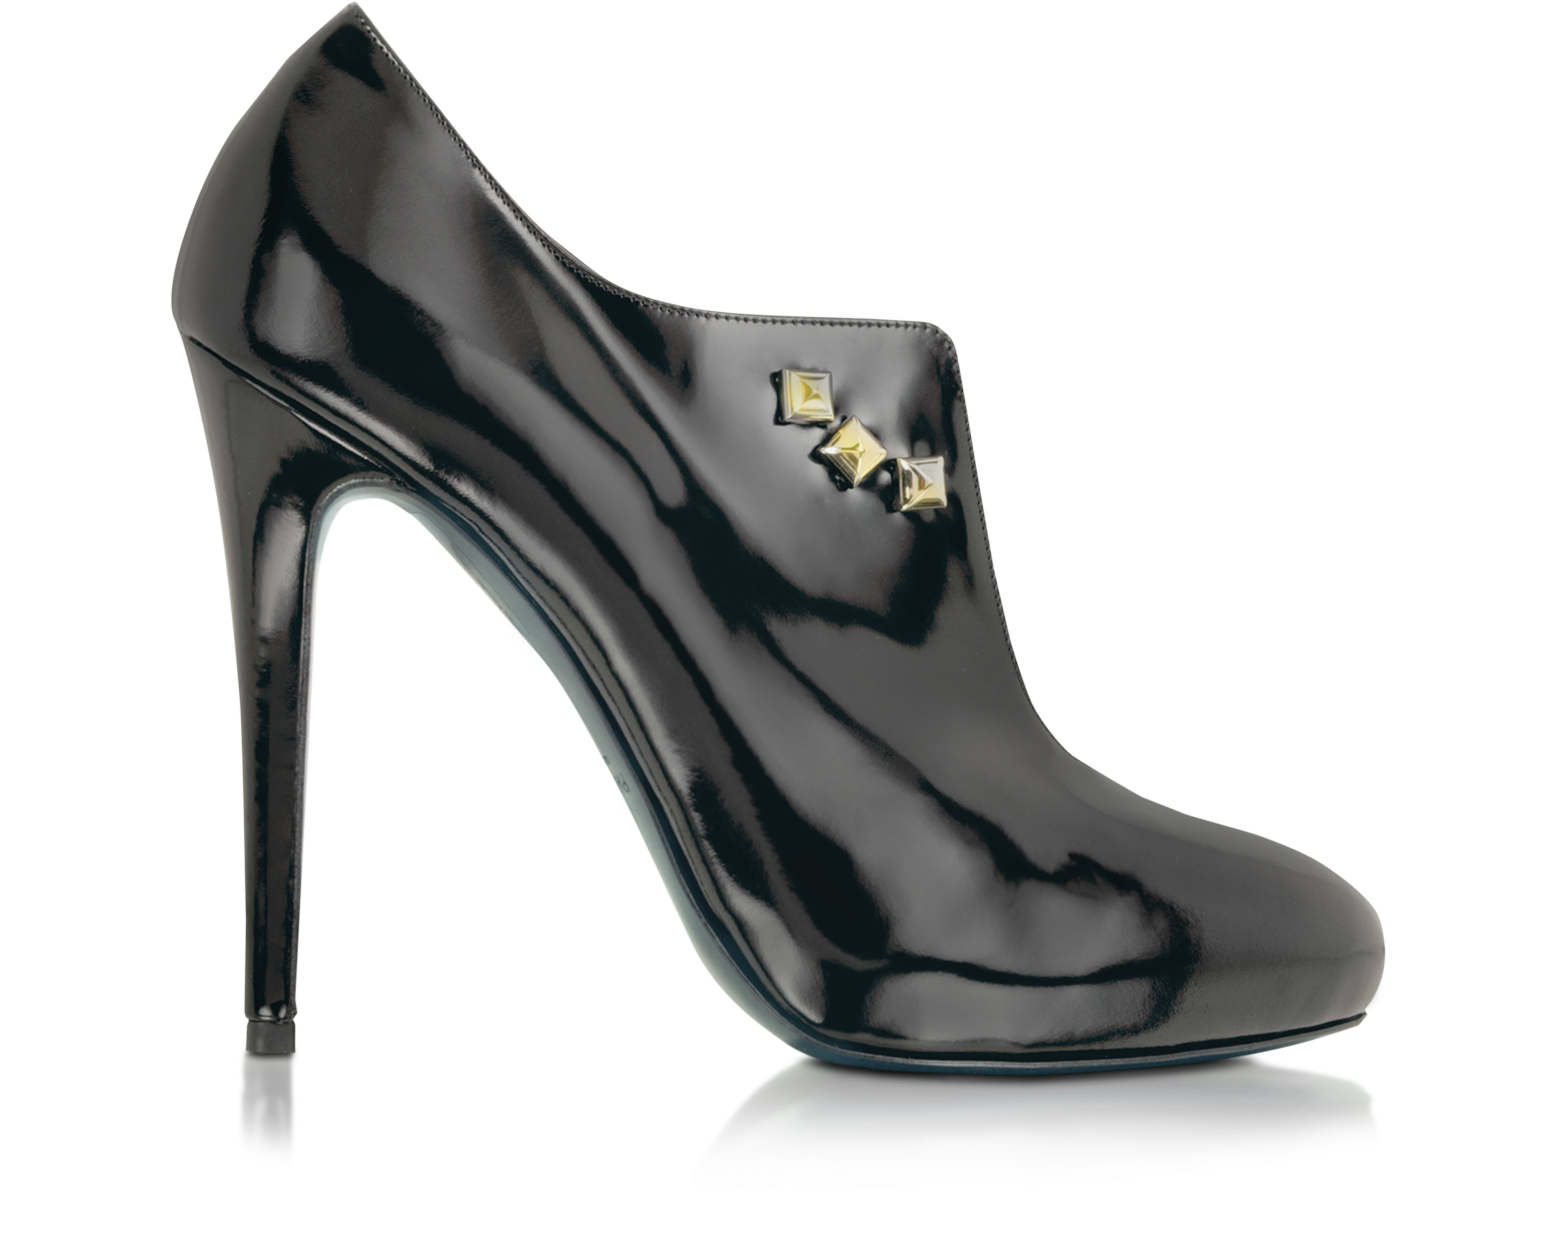 Patrizia Pepe Black Patent Leather Heeled Women's Shoes 37 IT/EU at ...